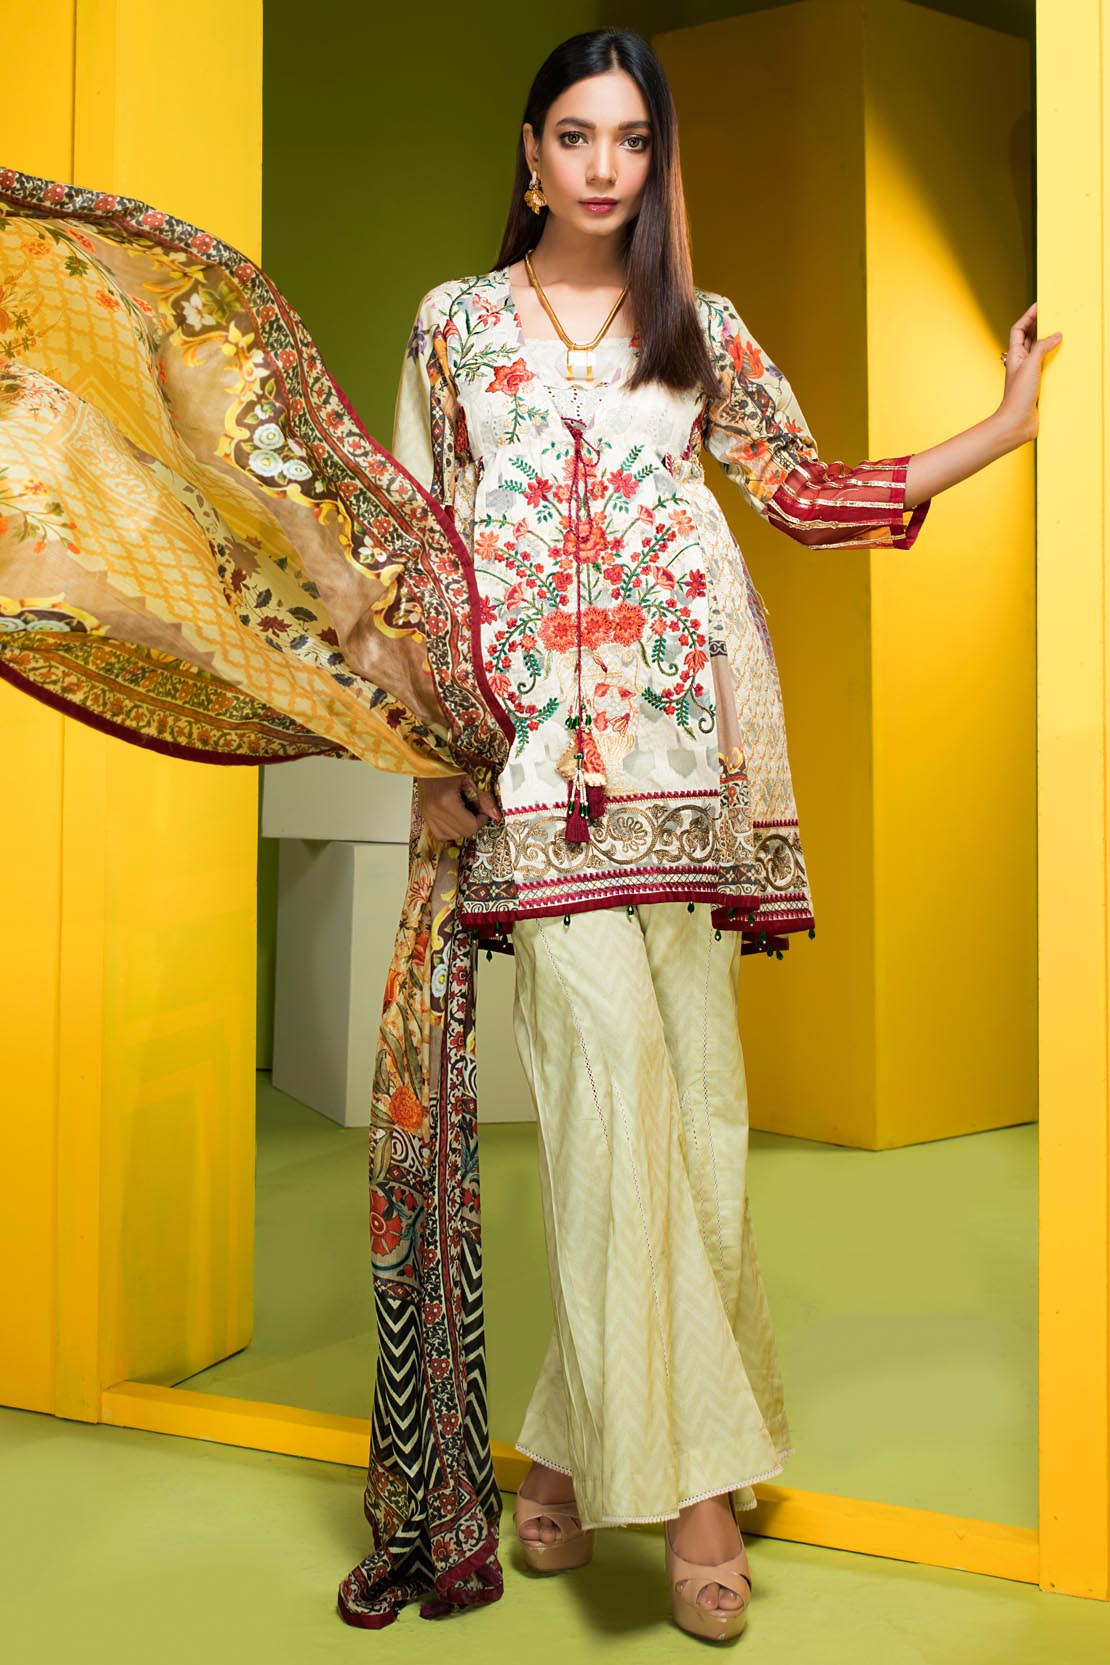 Buy this pretty Pakistani semi formal dress by Warda Saleem in cream color